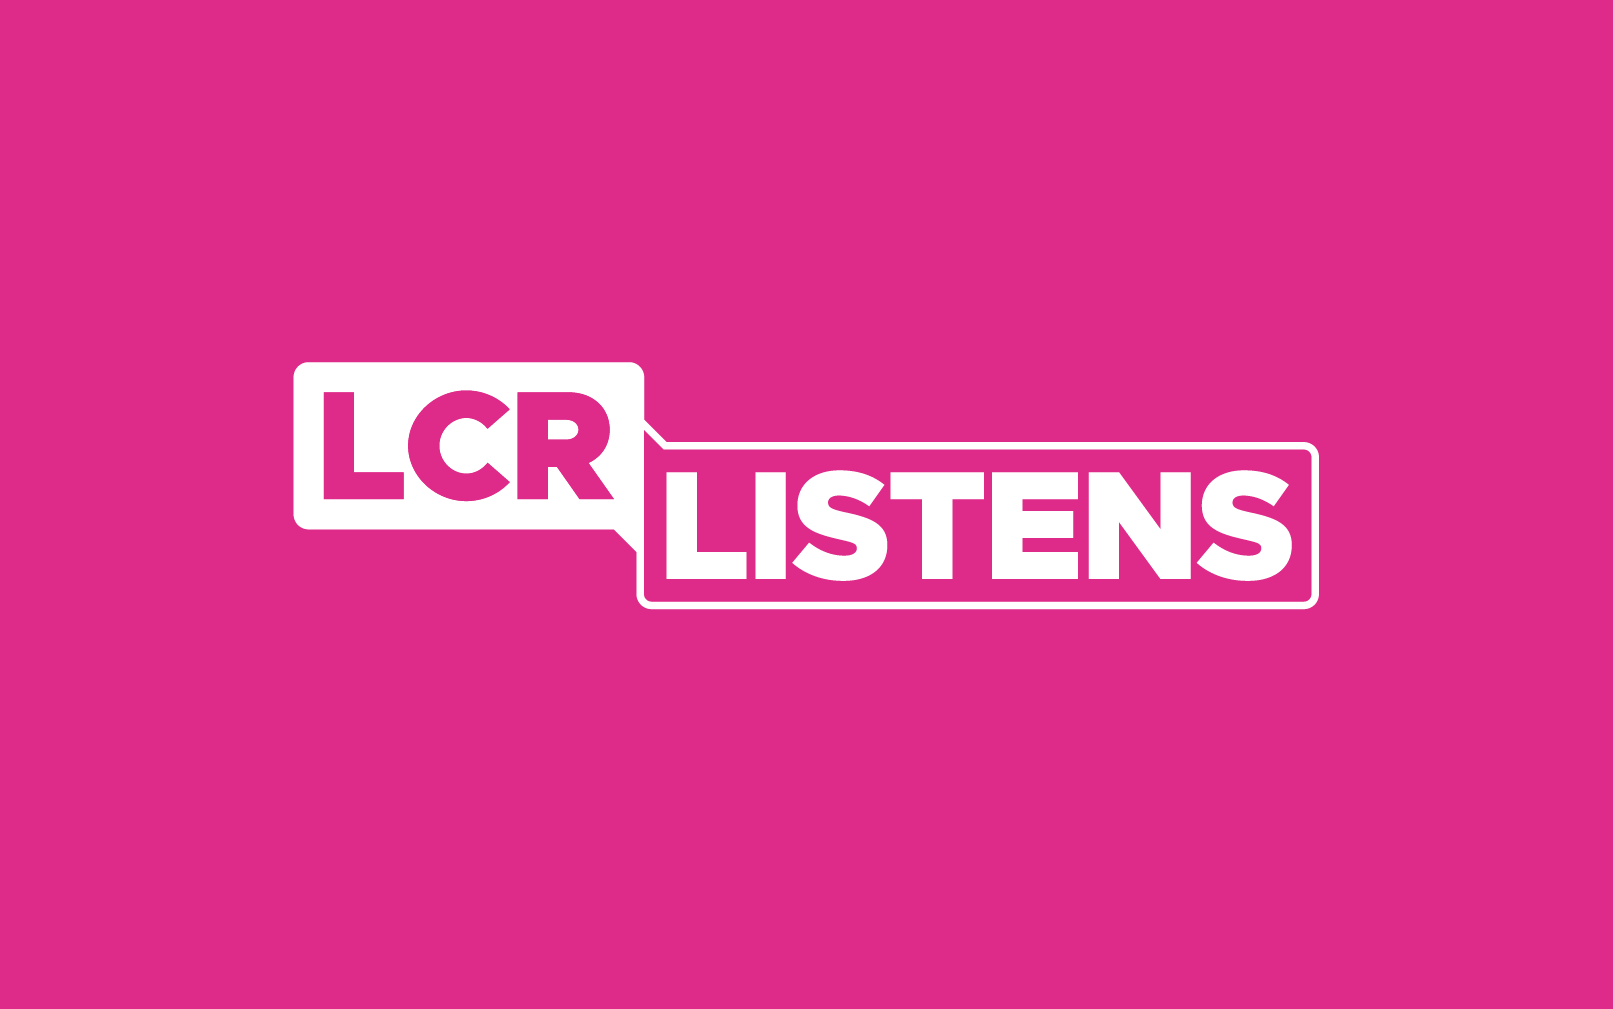 LCR Listens white logo on magenta background